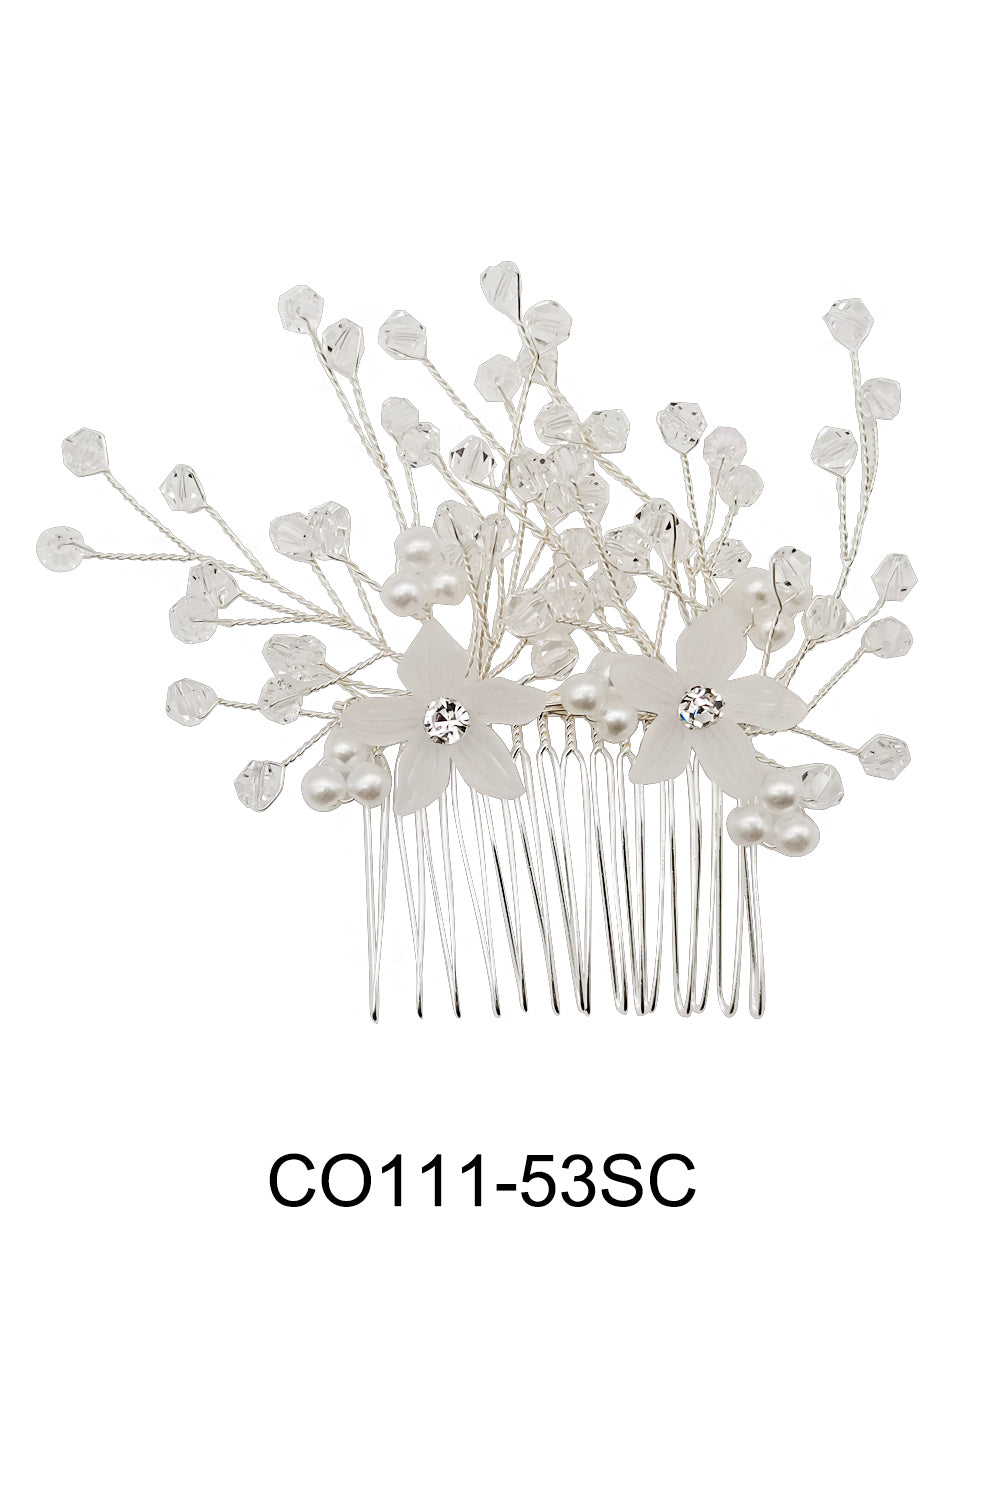 CO111-53SC (6PC)